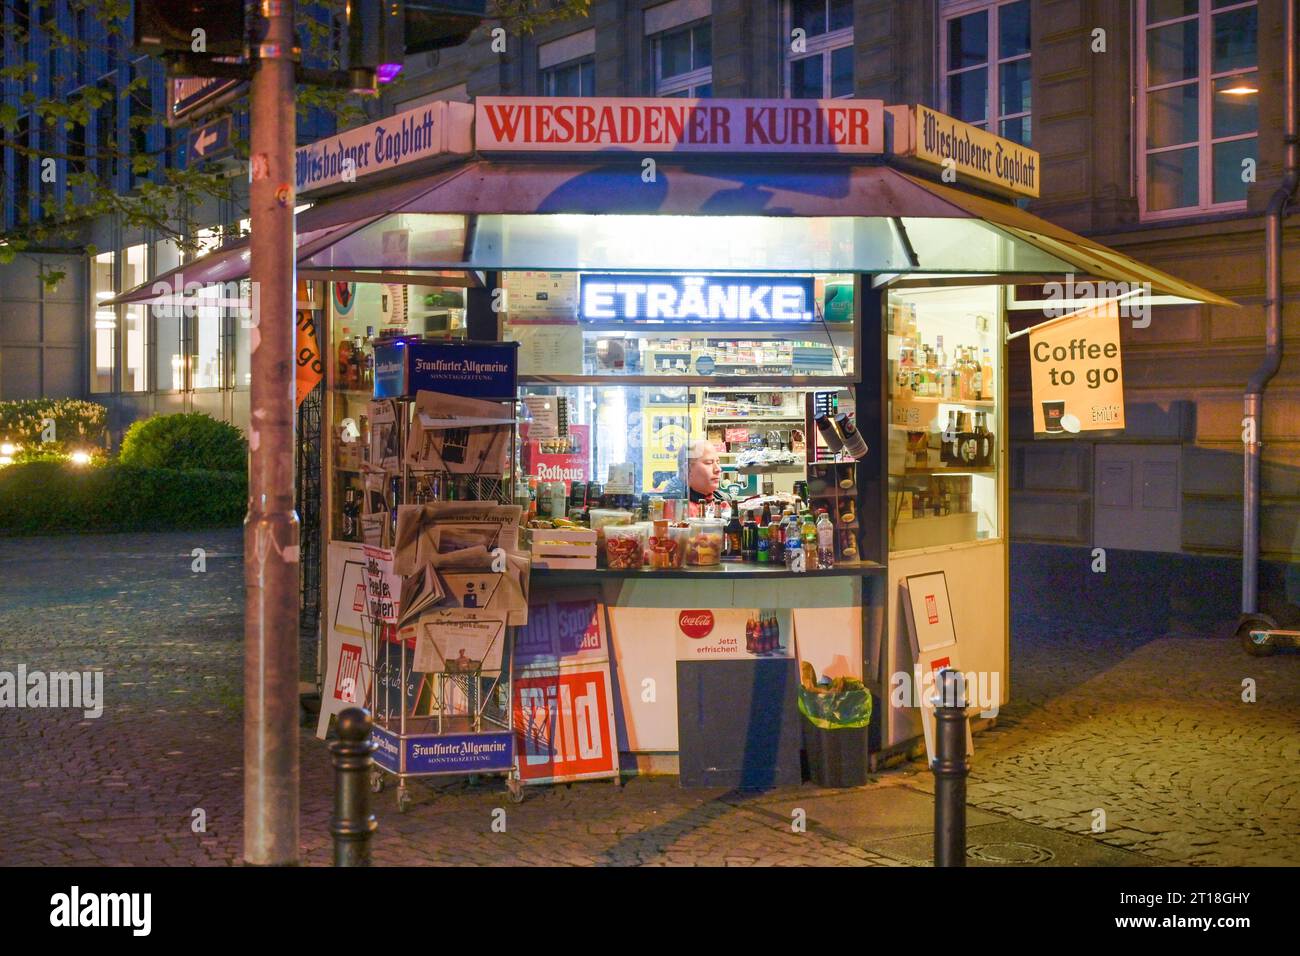 Späti Kiosk, Bahnhofstraße, Wiesbaden, Hessen, Deutschland Stock Photo